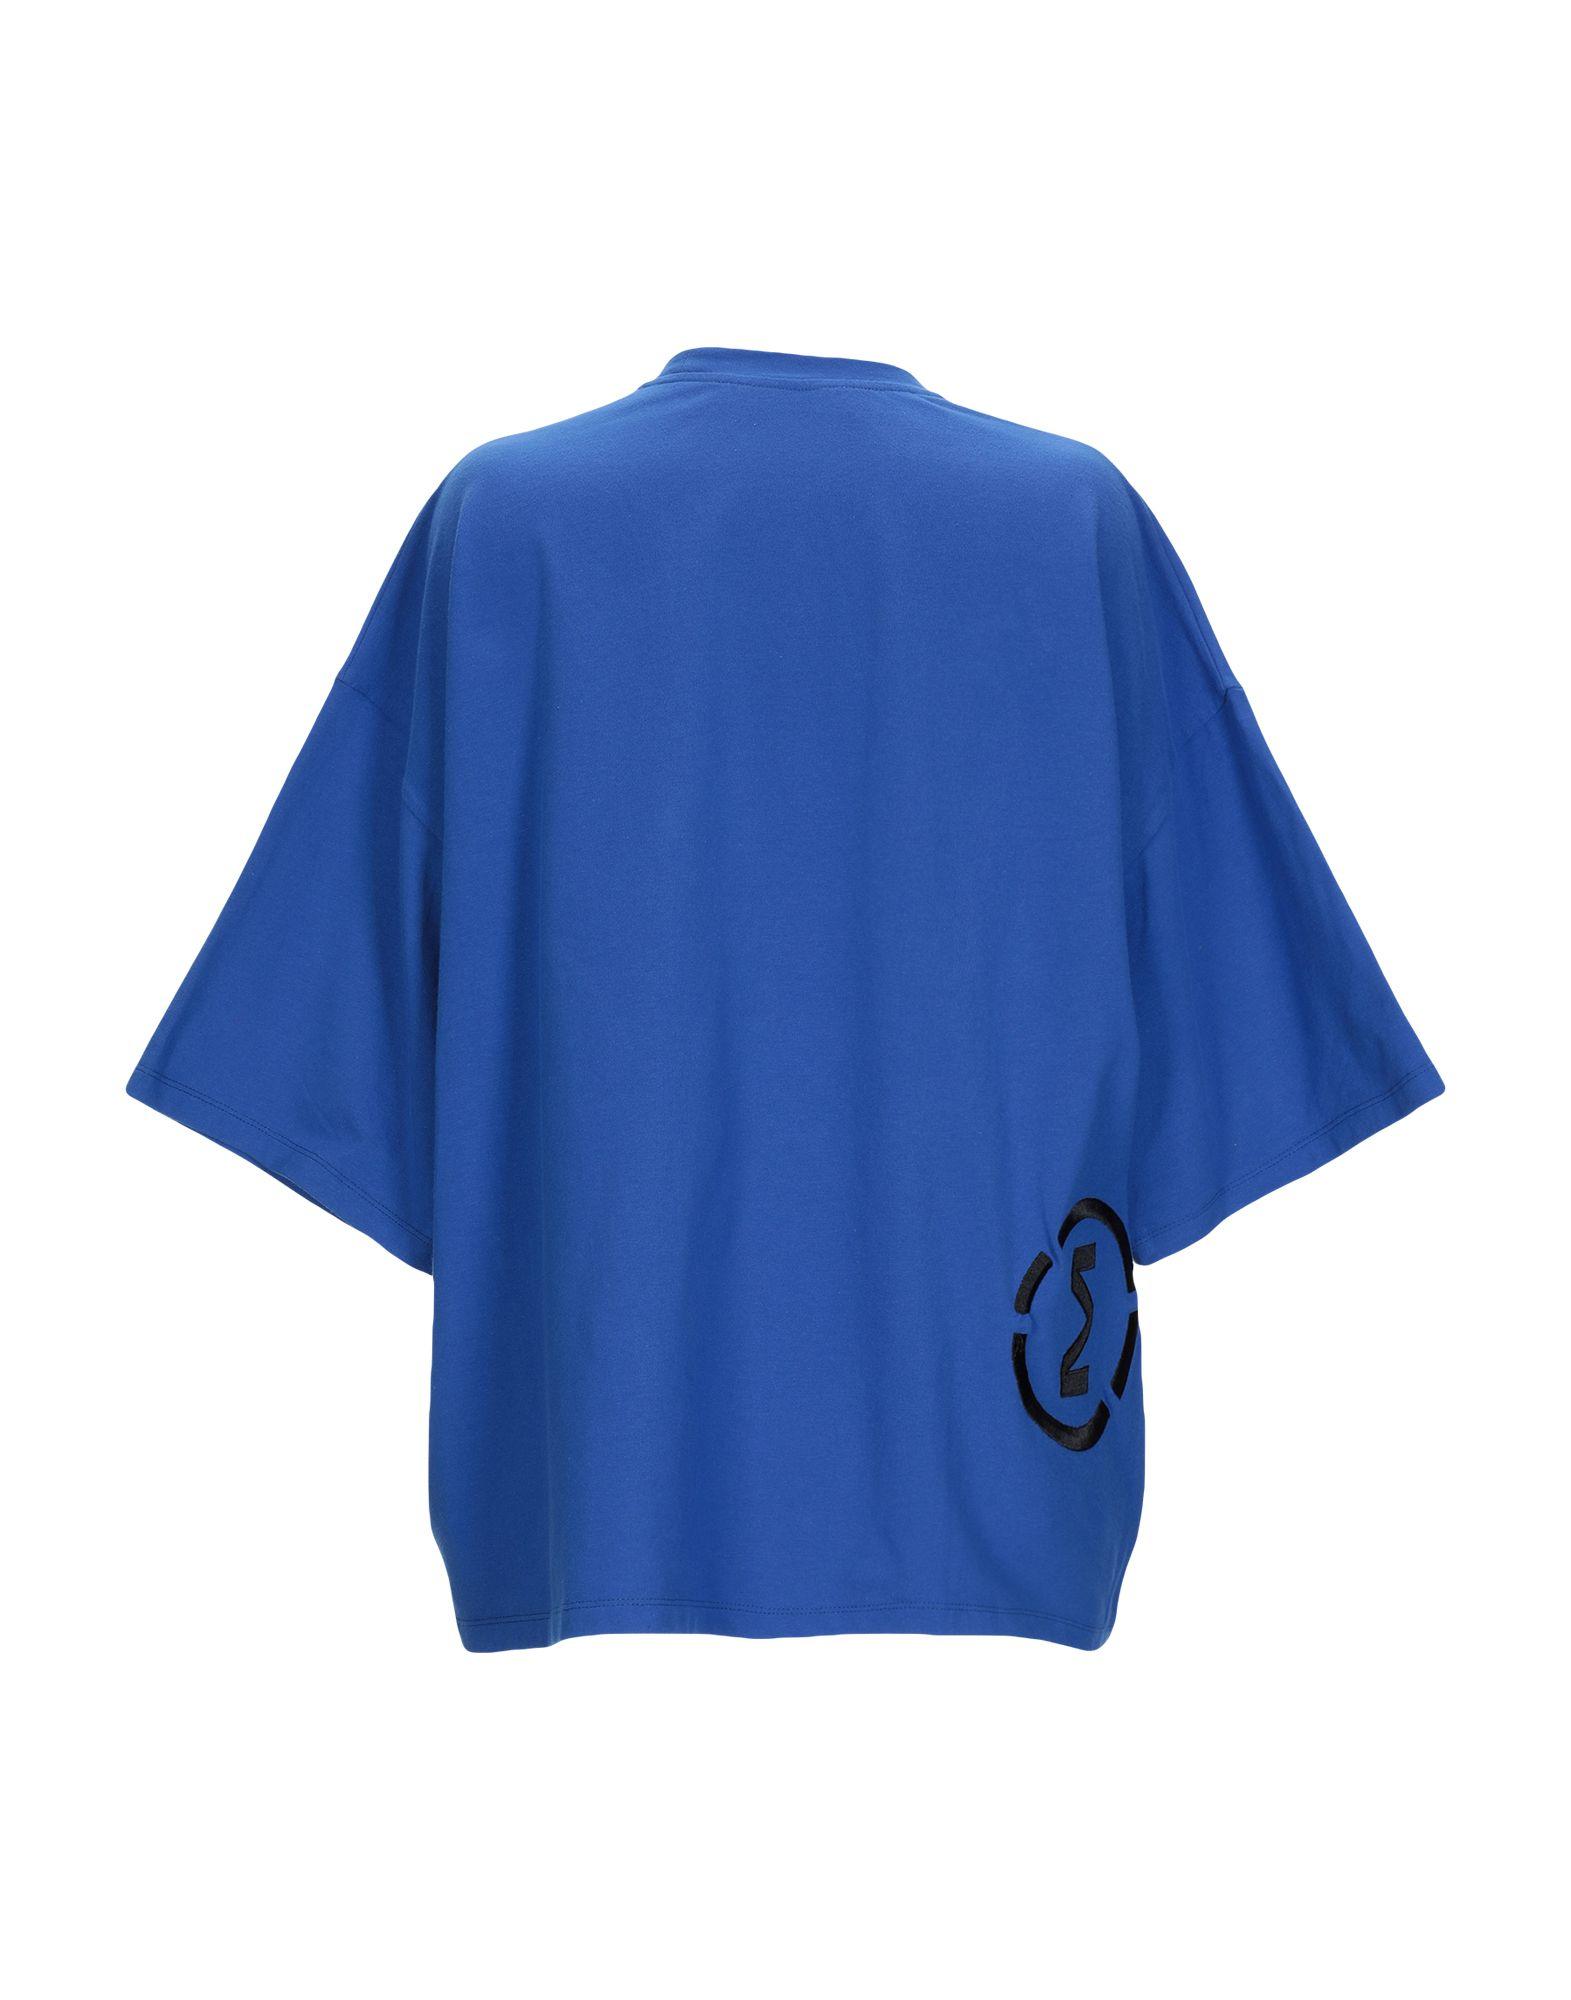 Matthew Adams Dolan T-shirt in Bright Blue (Blue) - Lyst